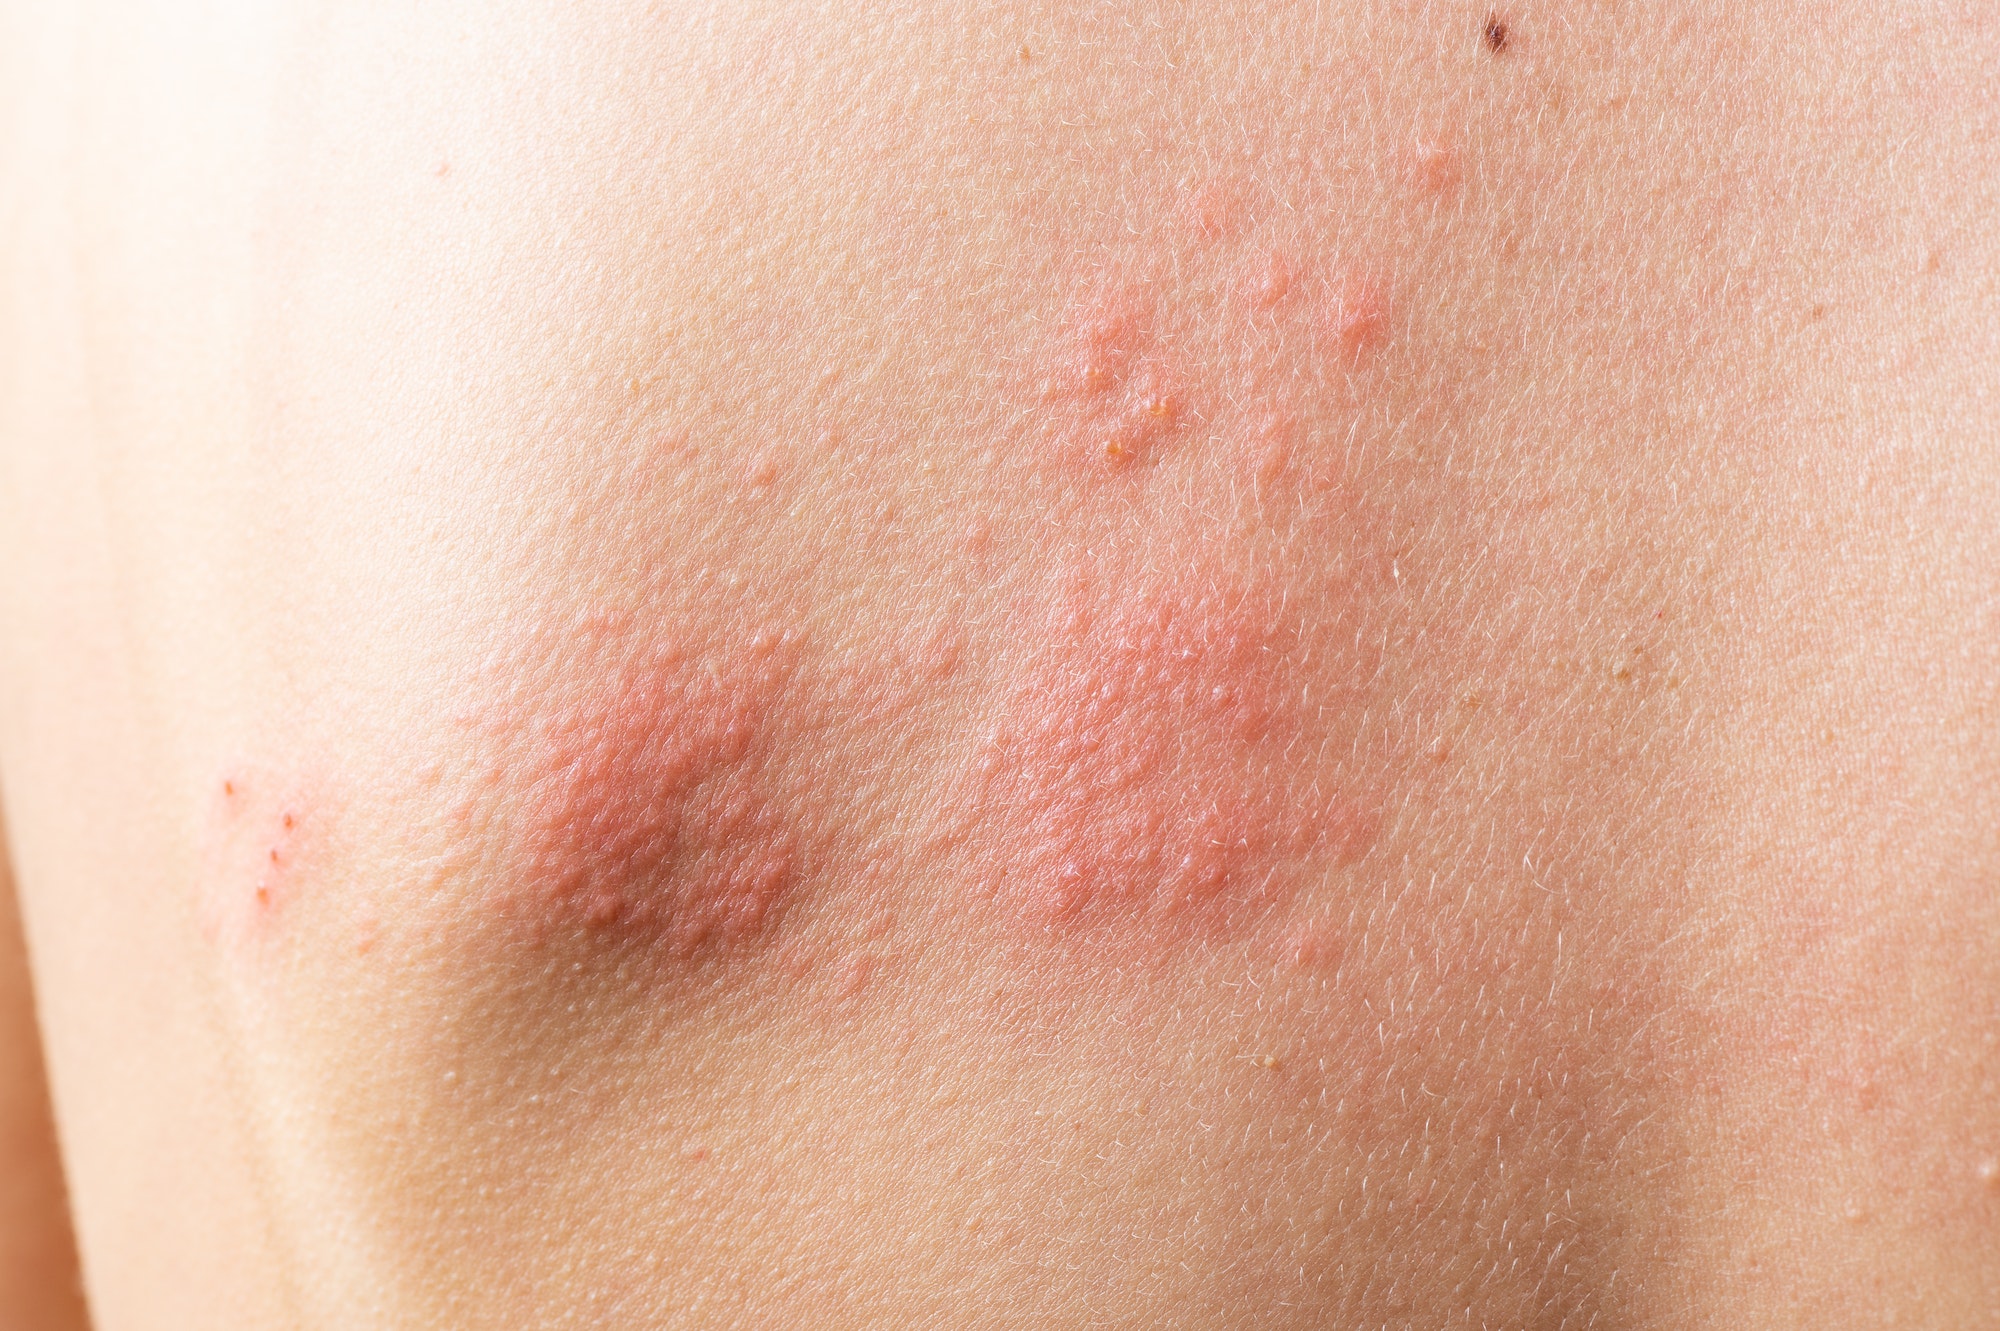 Skin infected Herpes zoster virus. Herpes Virus on body. urticaria rash